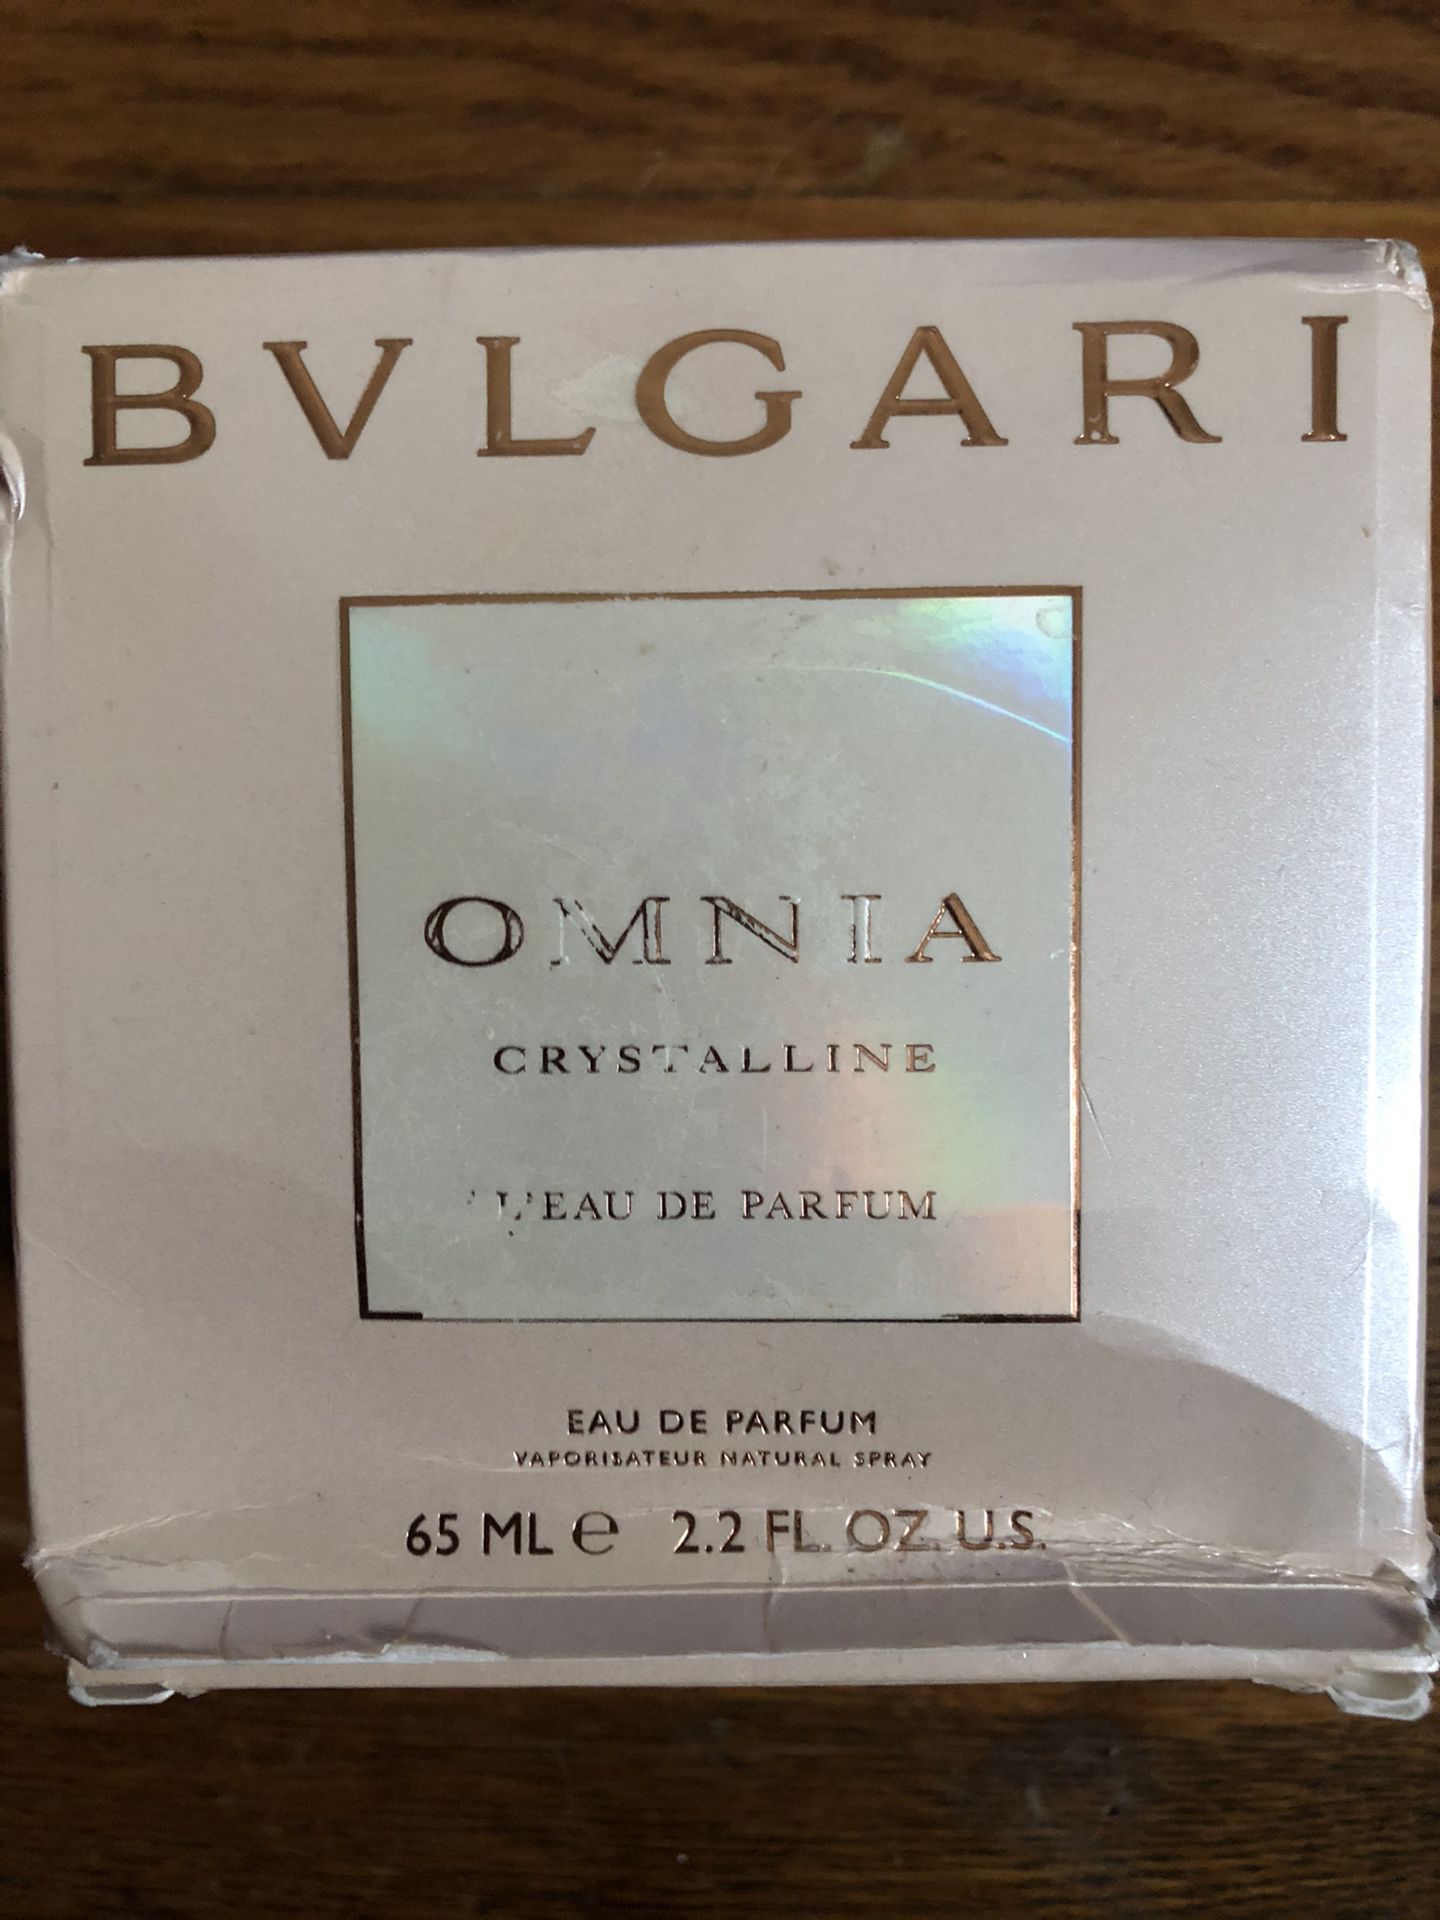 Omnia crystalline perfume for women